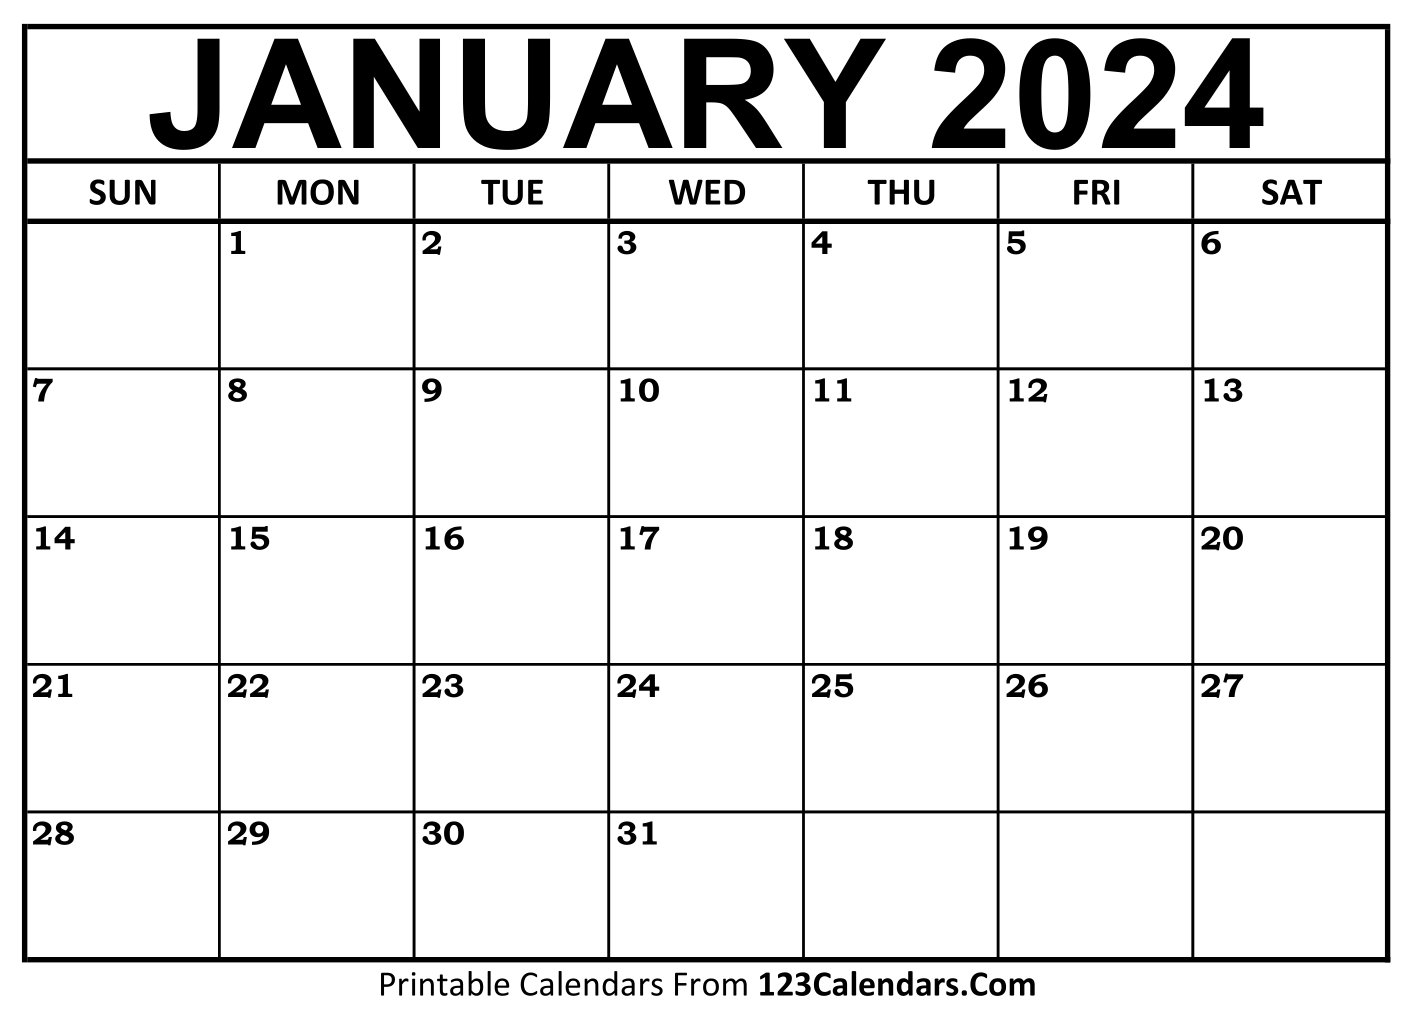 Printable January 2024 Calendar Templates - 123Calendars for Free January 2024 Printable Calendar